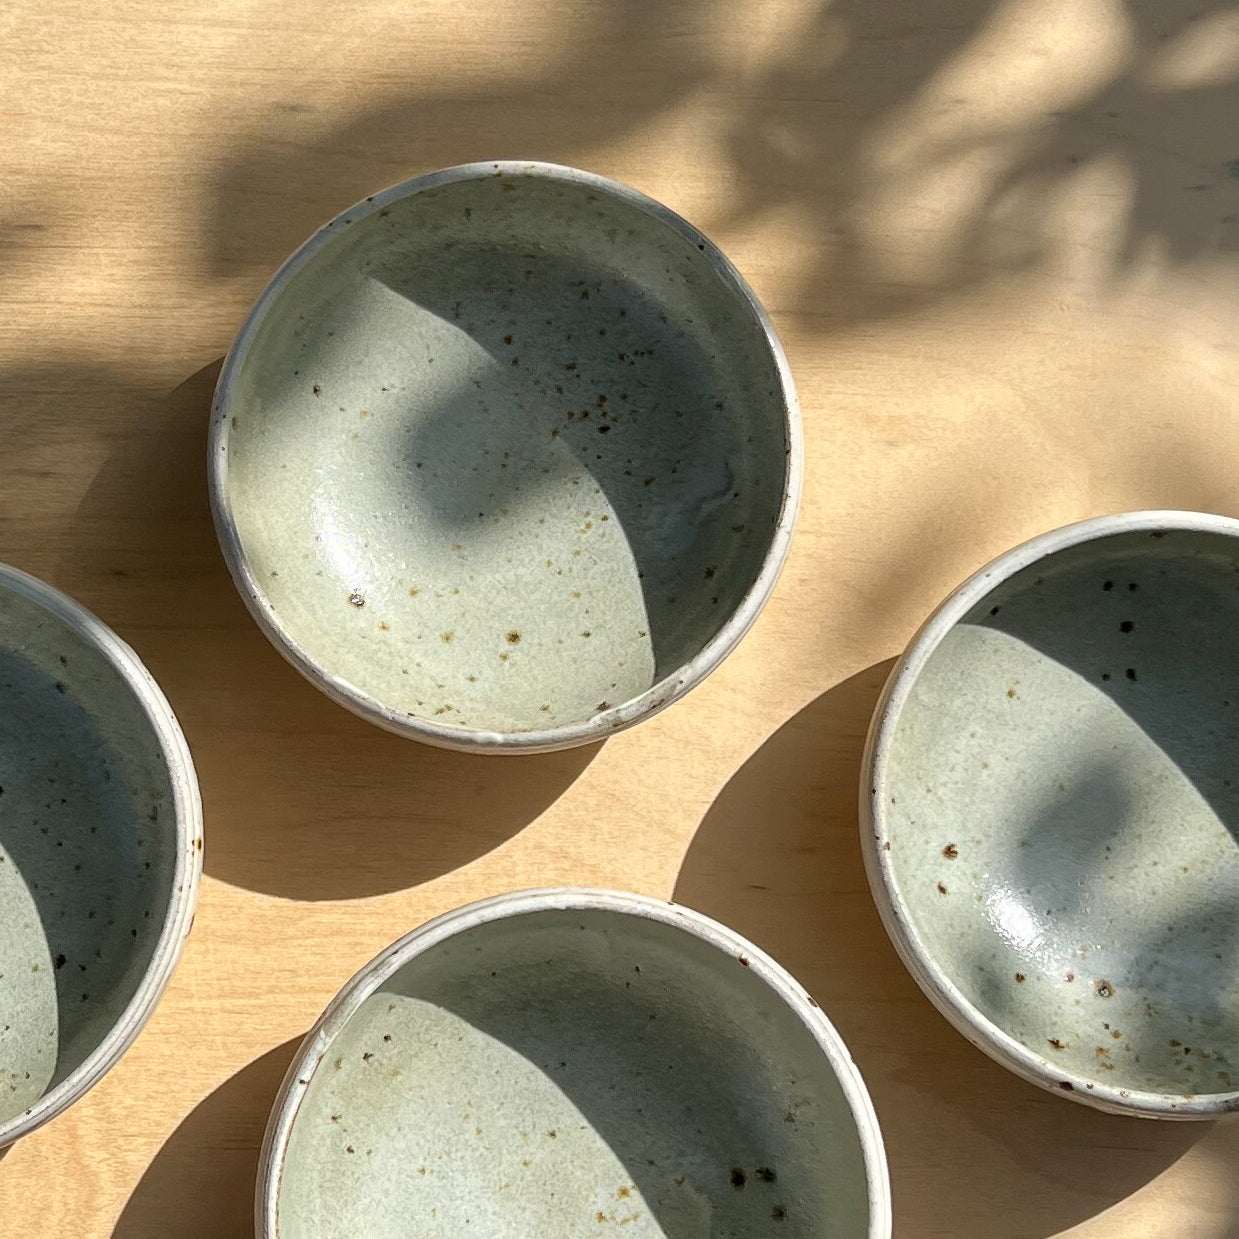 Kohiki Color Bowl 5.5", Green